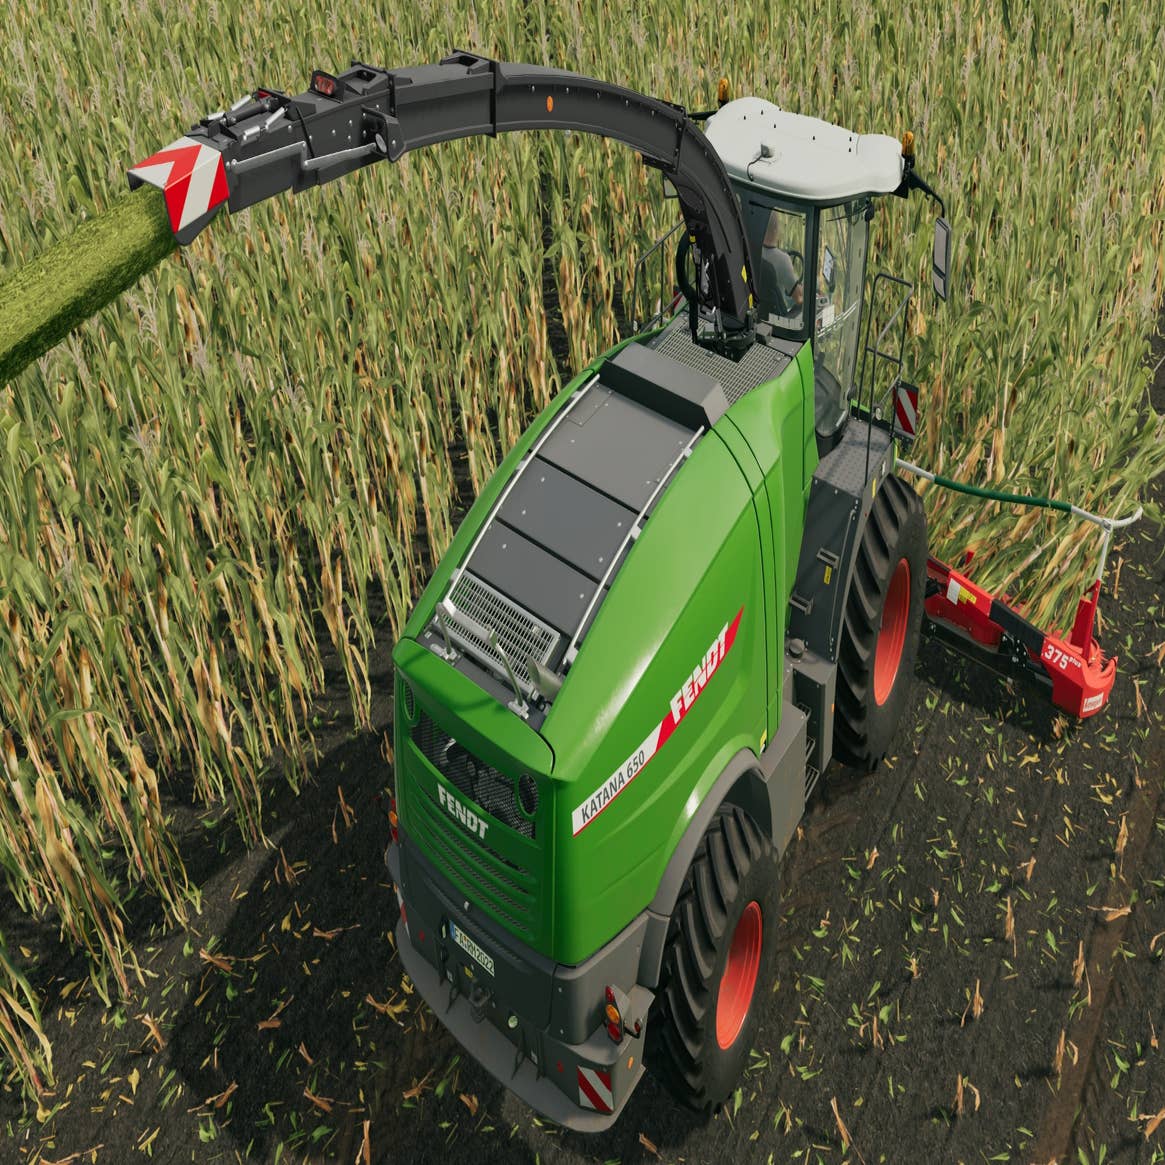 Review - Farming Simulator 22 - WayTooManyGames